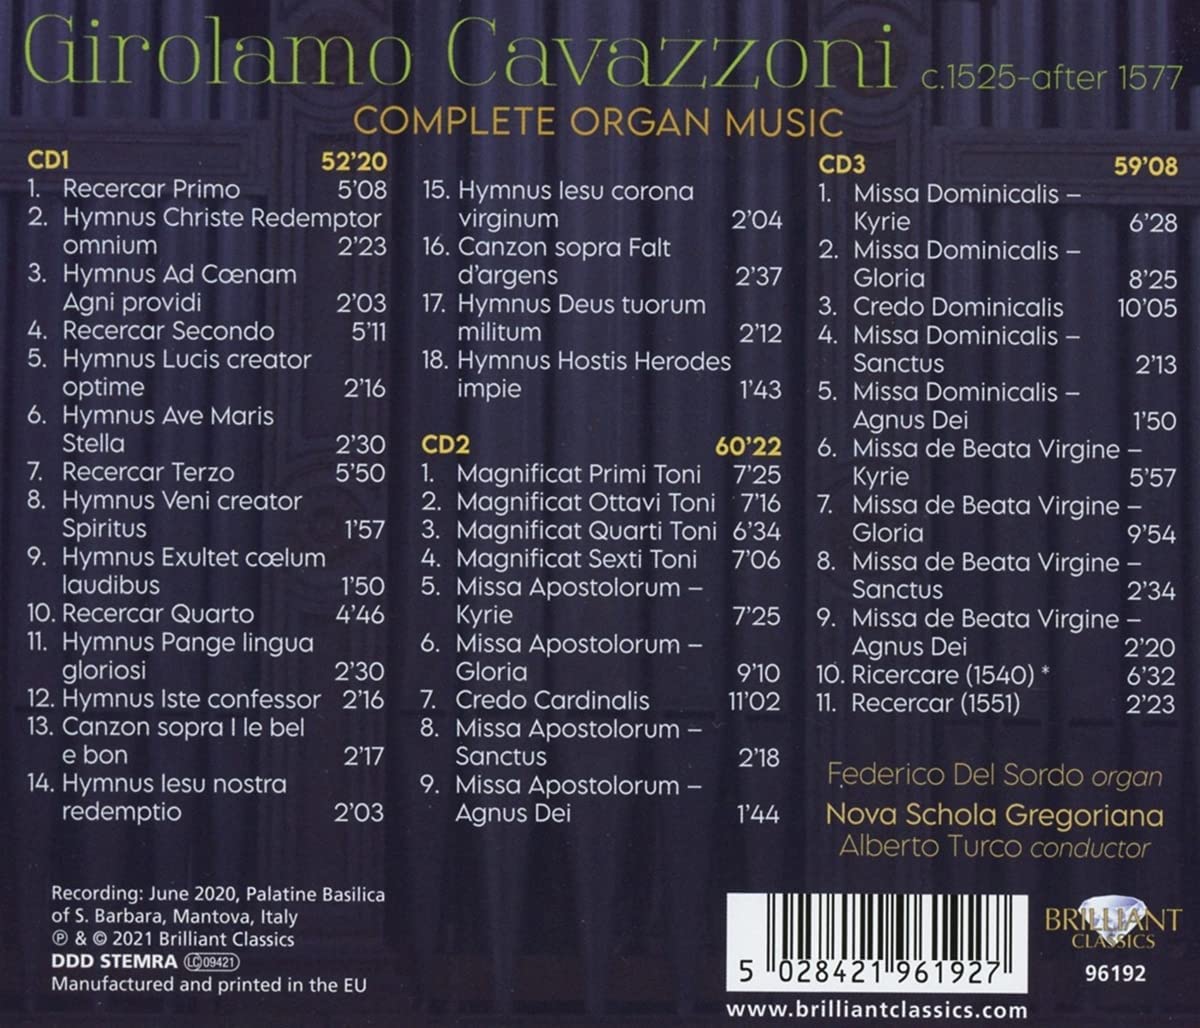 Federico del Sordo 지롤라모 카바초니: 오르간 작품 전곡 (Girolamo Cavazzoni: Complete Organ Music) 